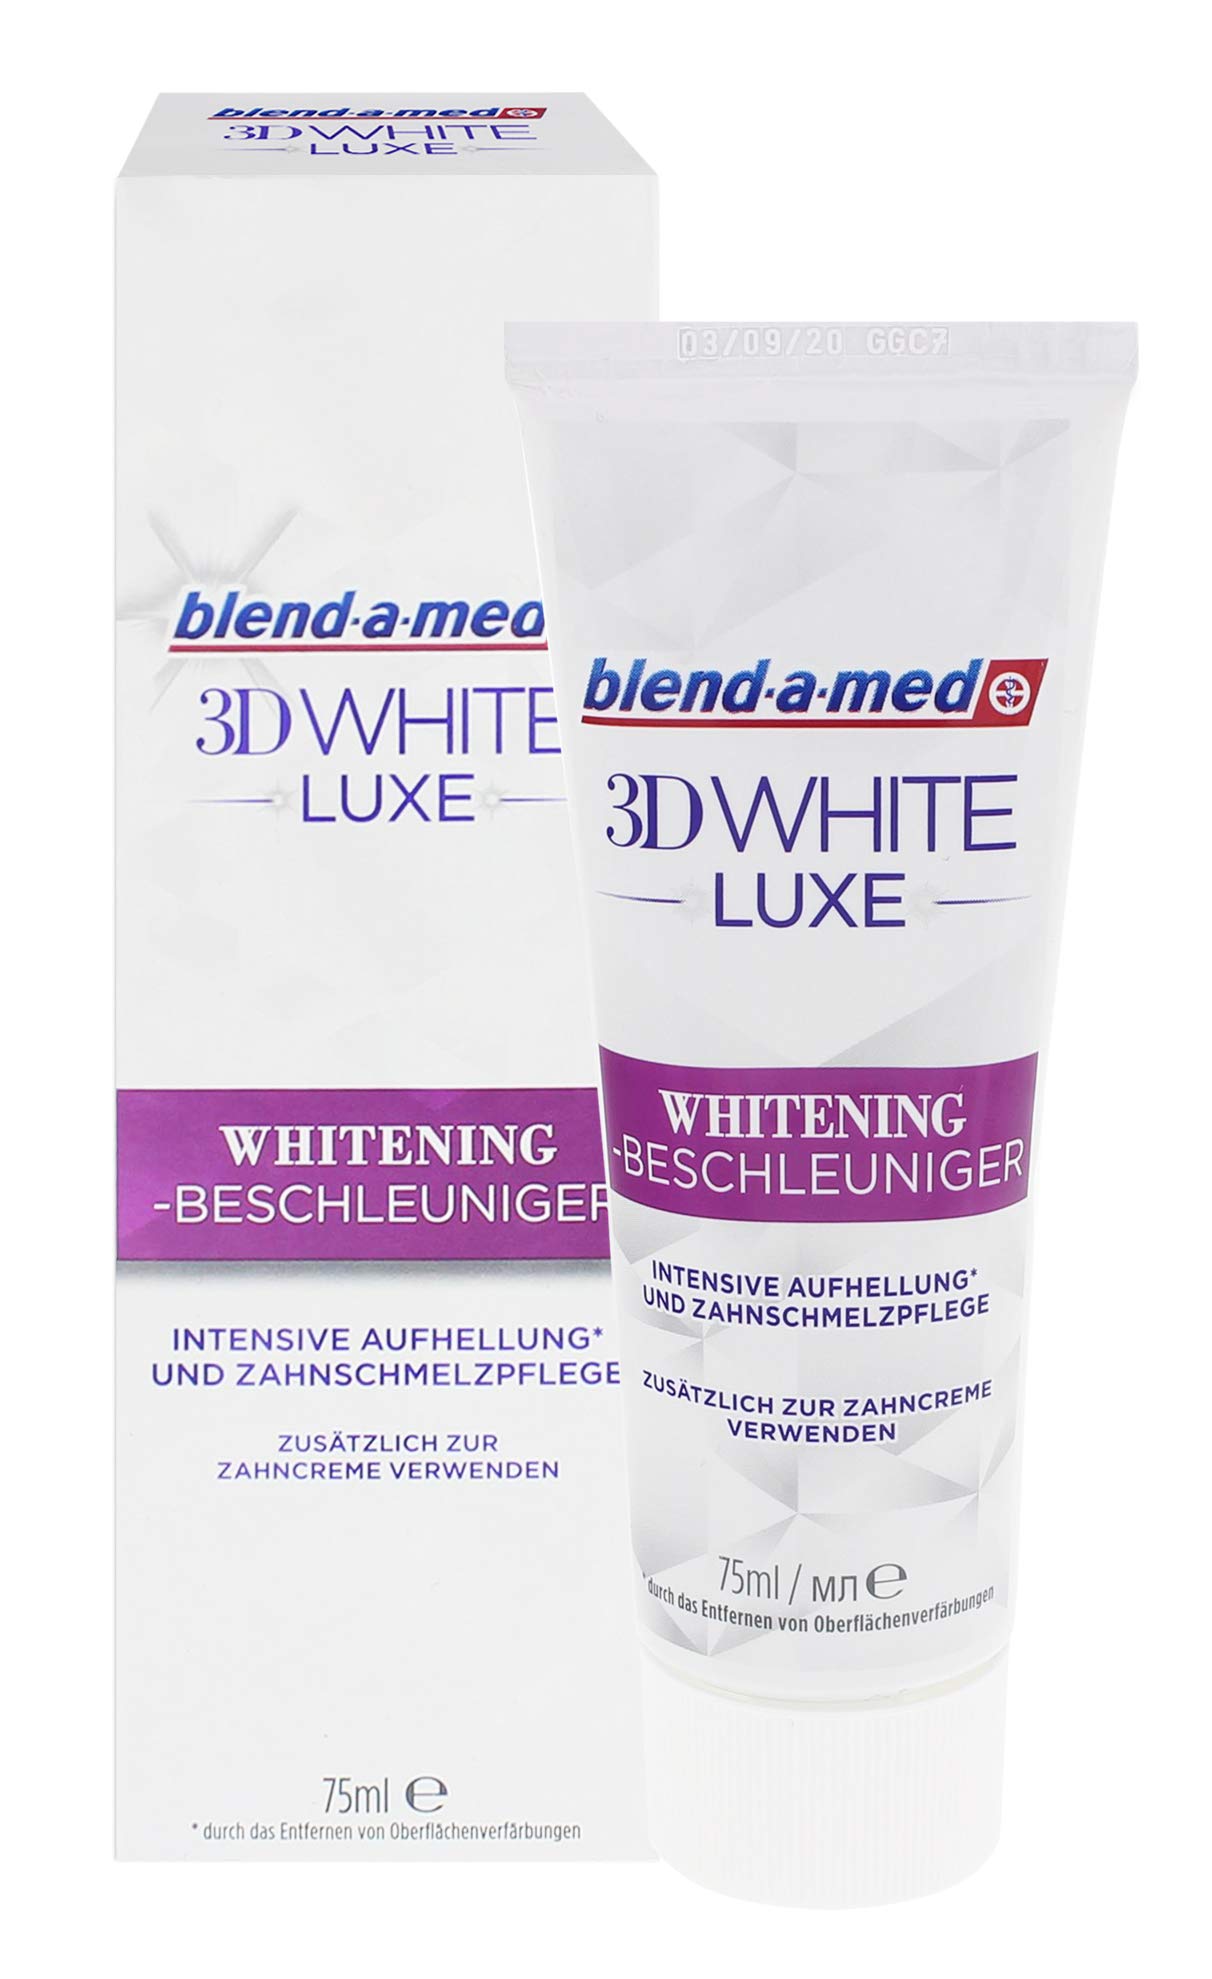 3 x Blend-a-med 3D White Luxe Whitening Beschleuniger Zahnschmelzpflege je 75ml